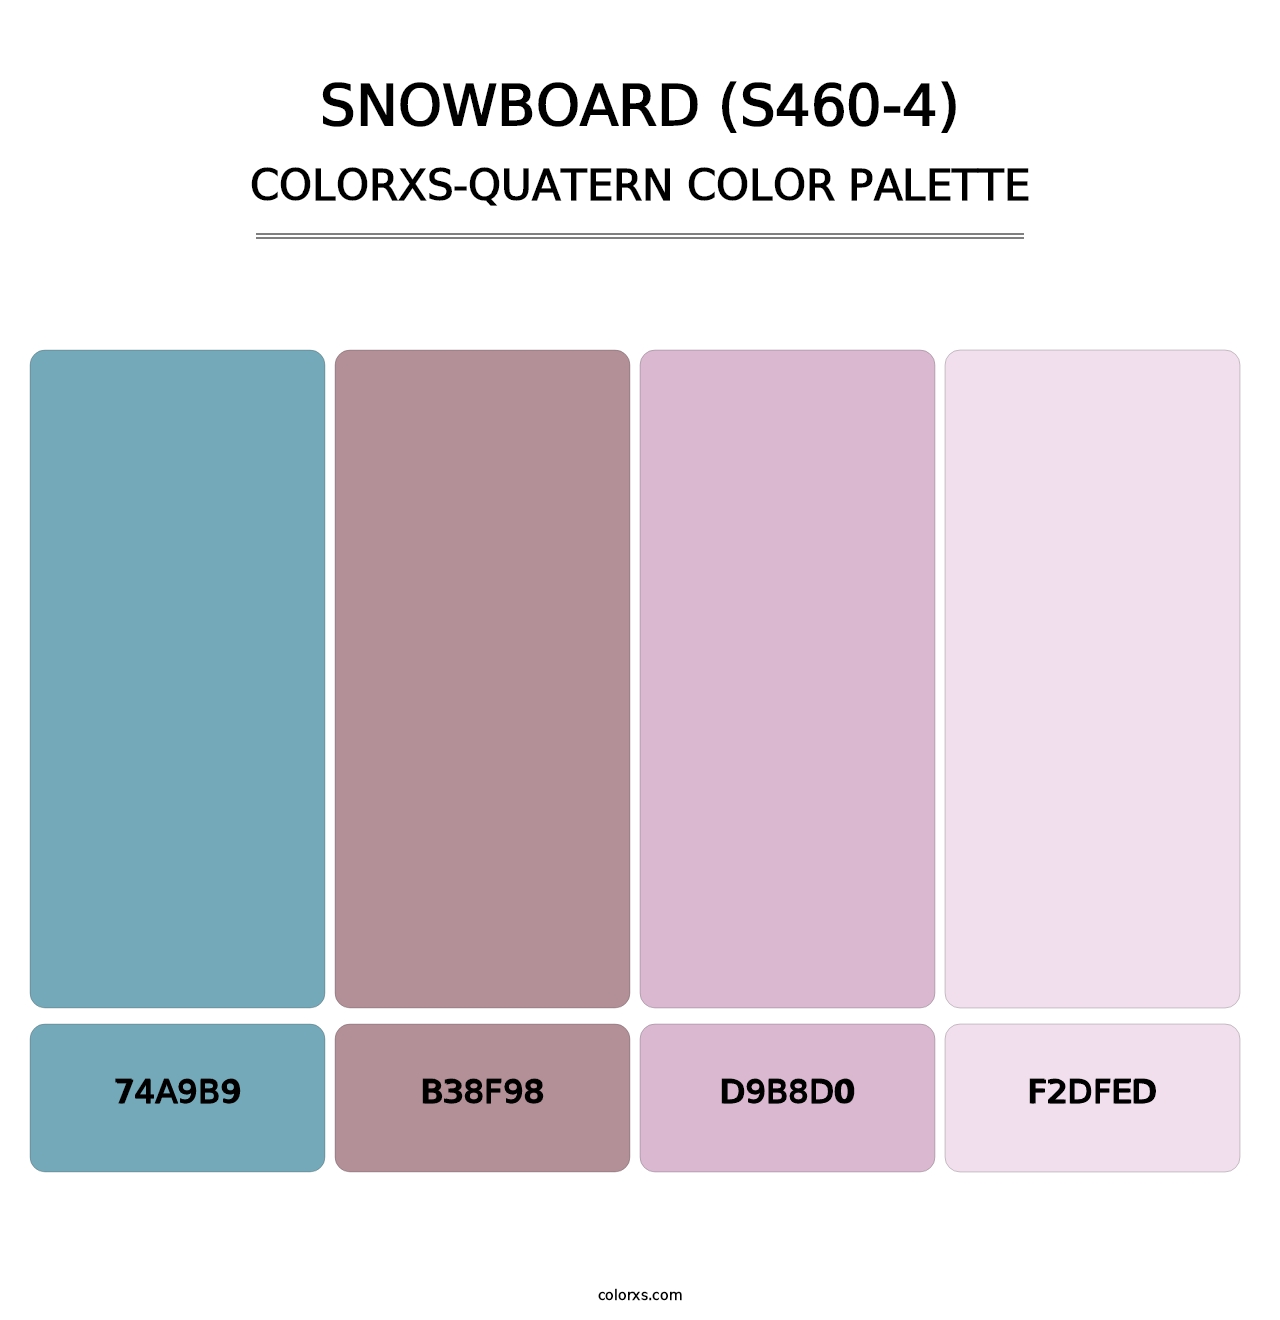 Snowboard (S460-4) - Colorxs Quatern Palette